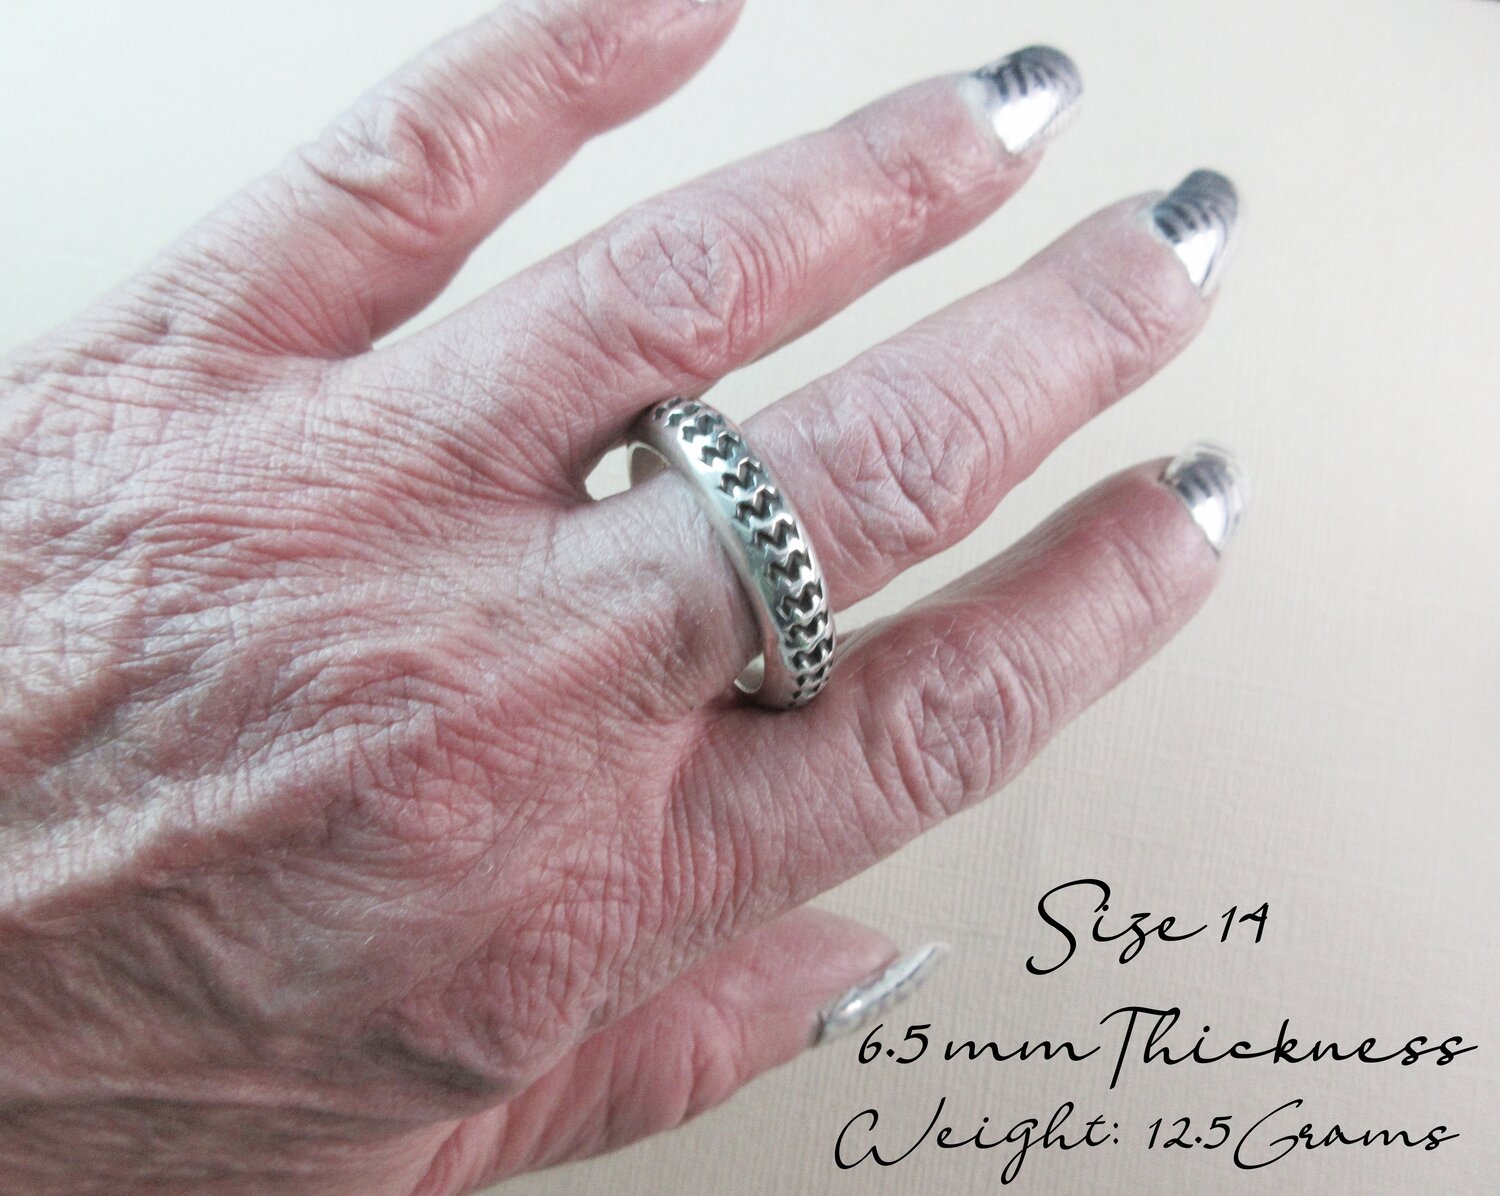 13in Stepped Ring Mandrel - Santa Fe Jewelers Supply : Santa Fe Jewelers  Supply